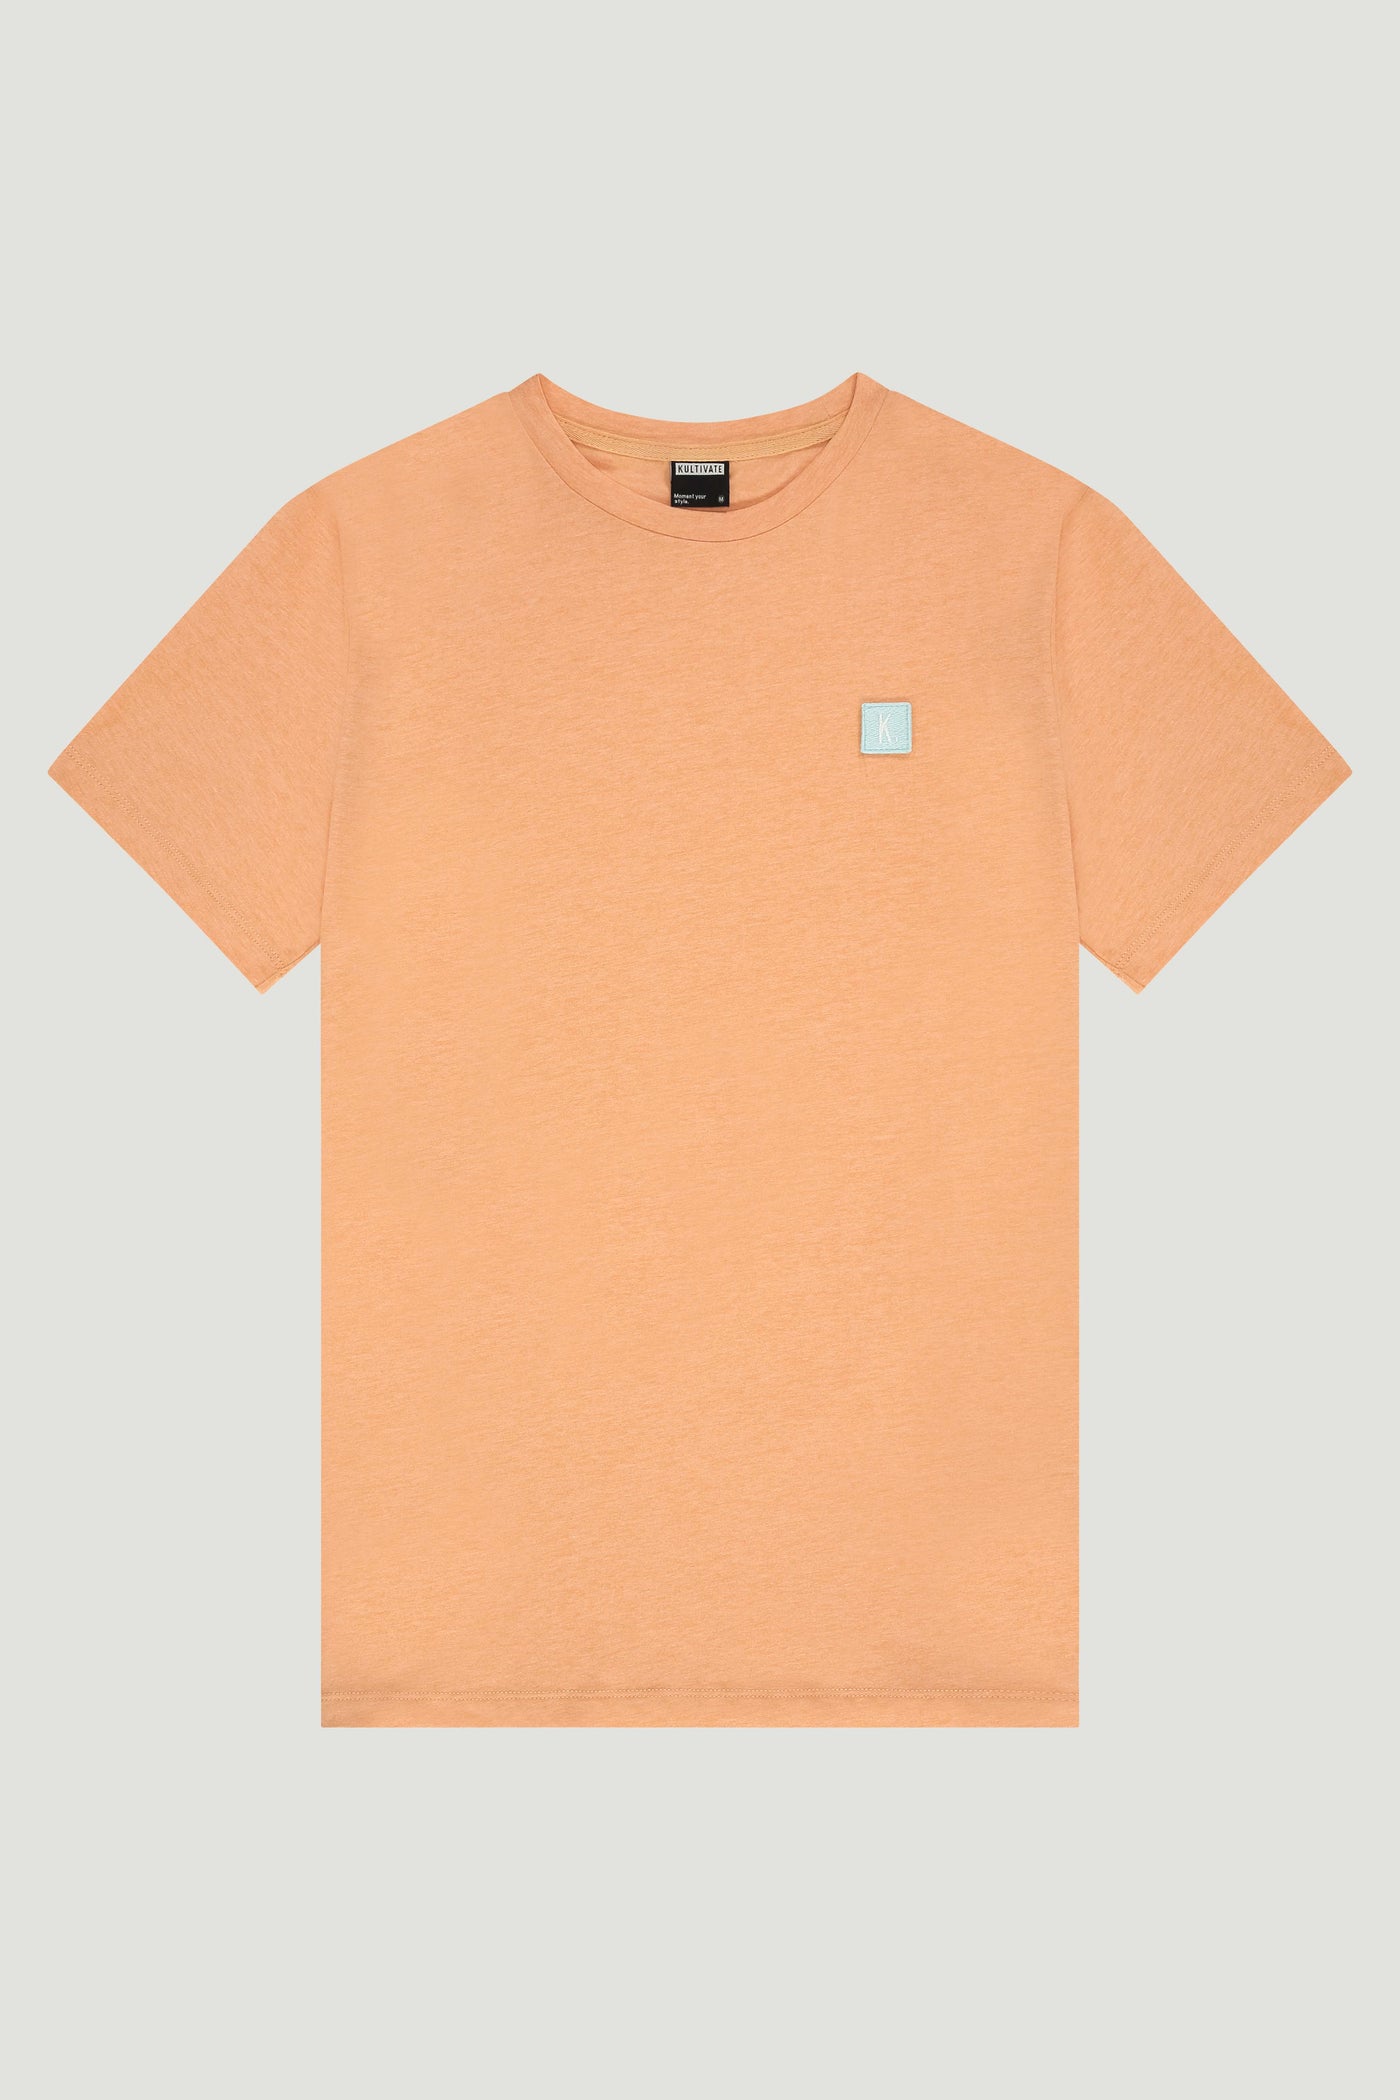 579 - Mock Orange